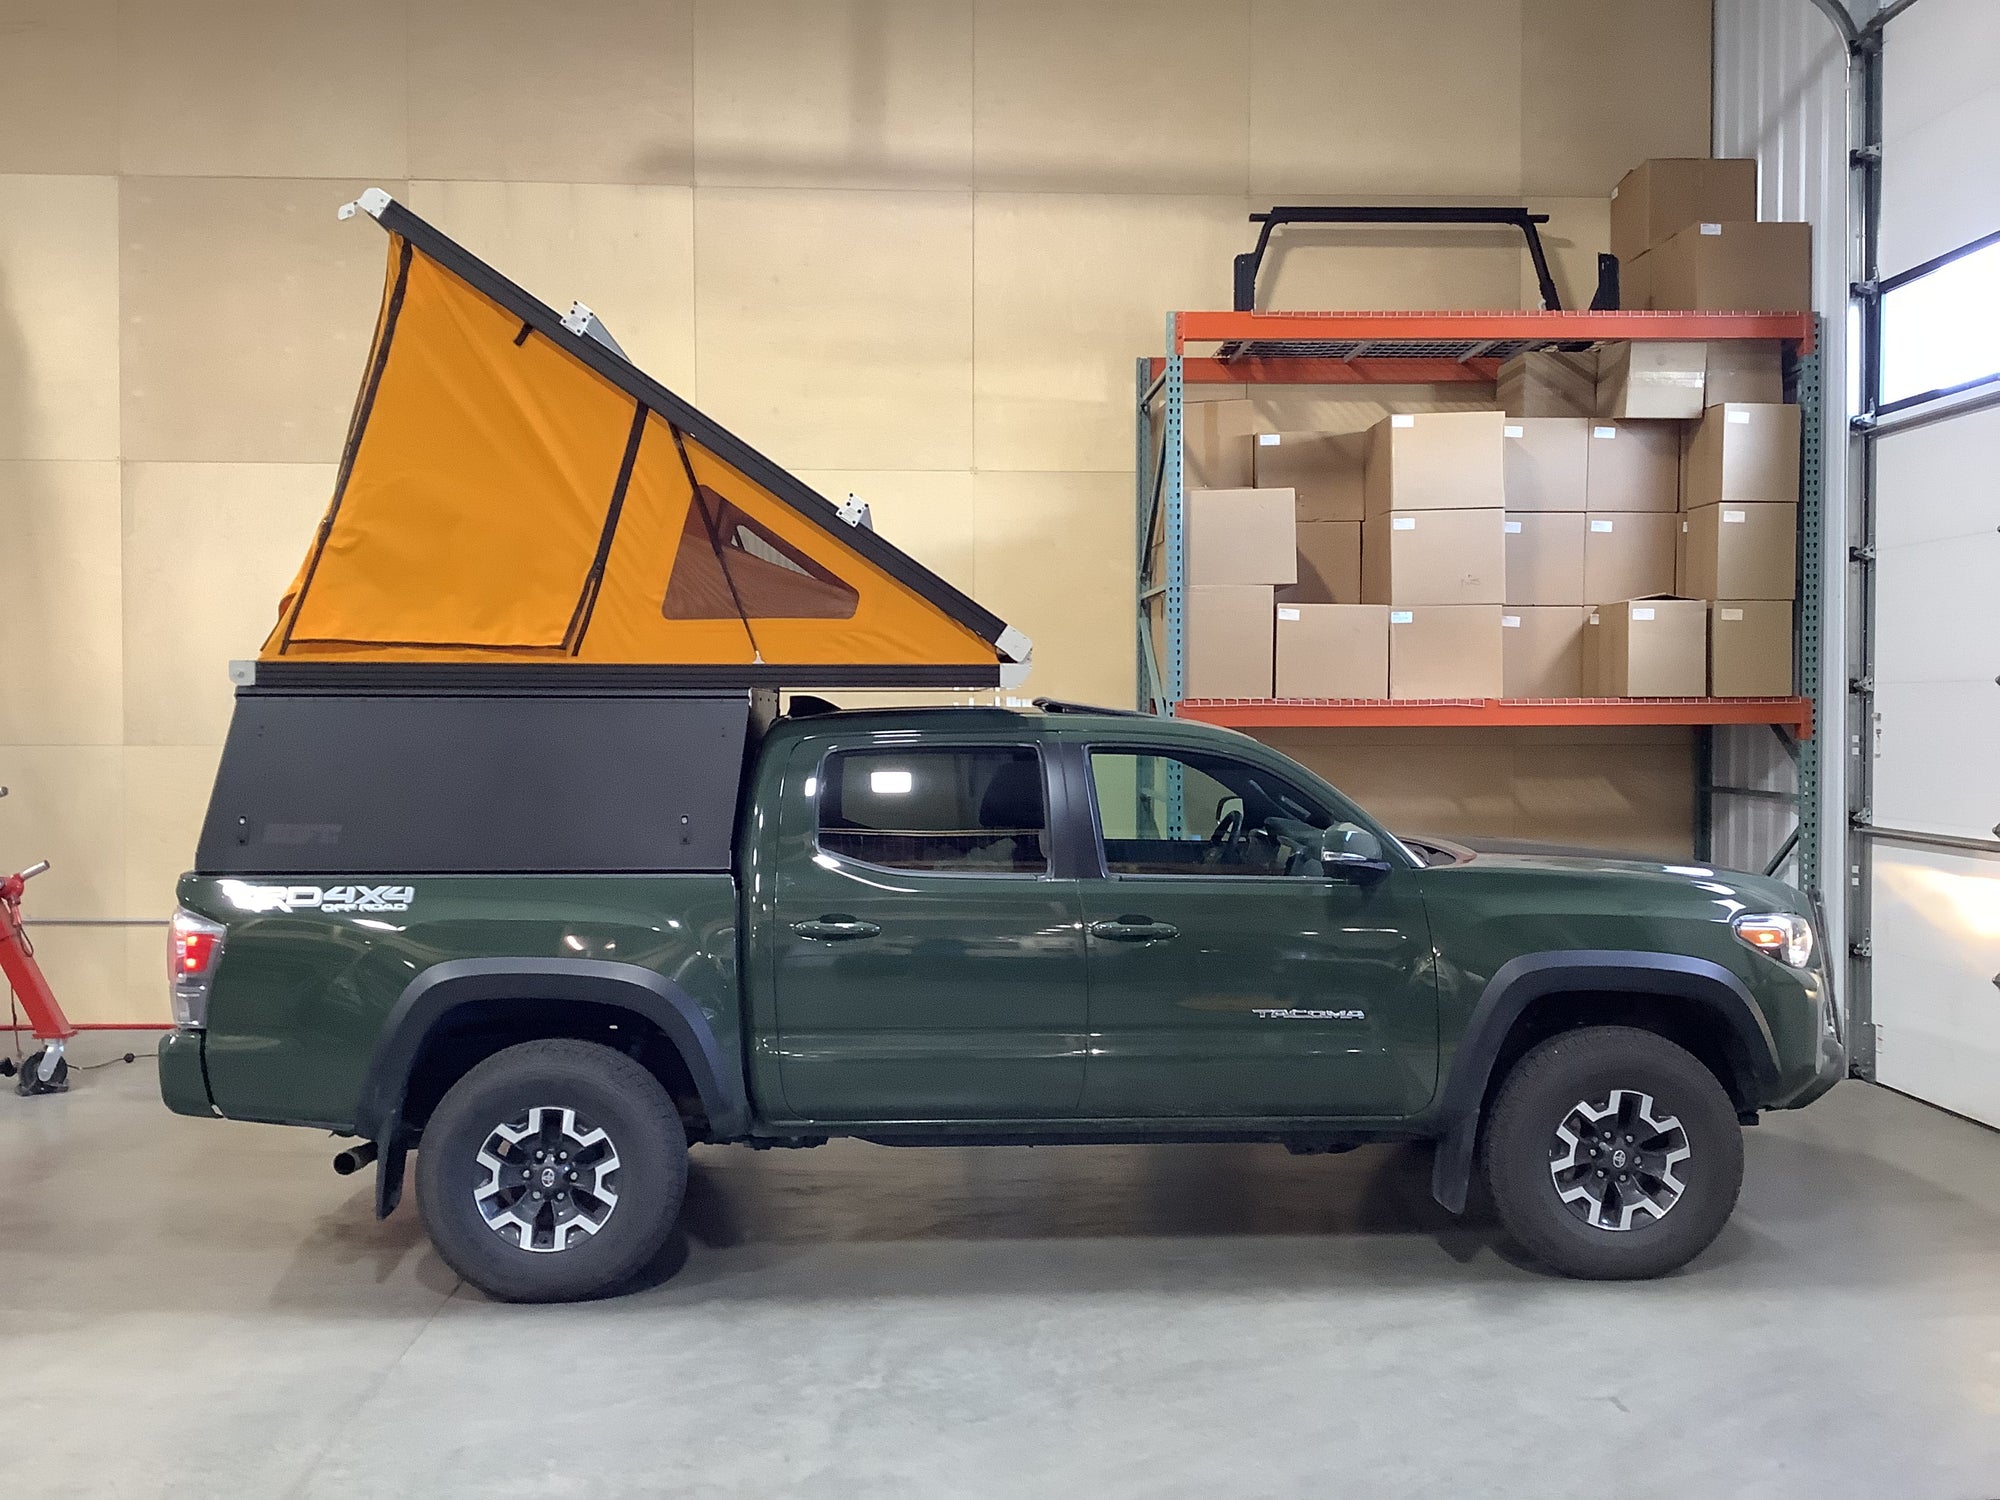 2021 Toyota Tacoma Camper - Build #3625